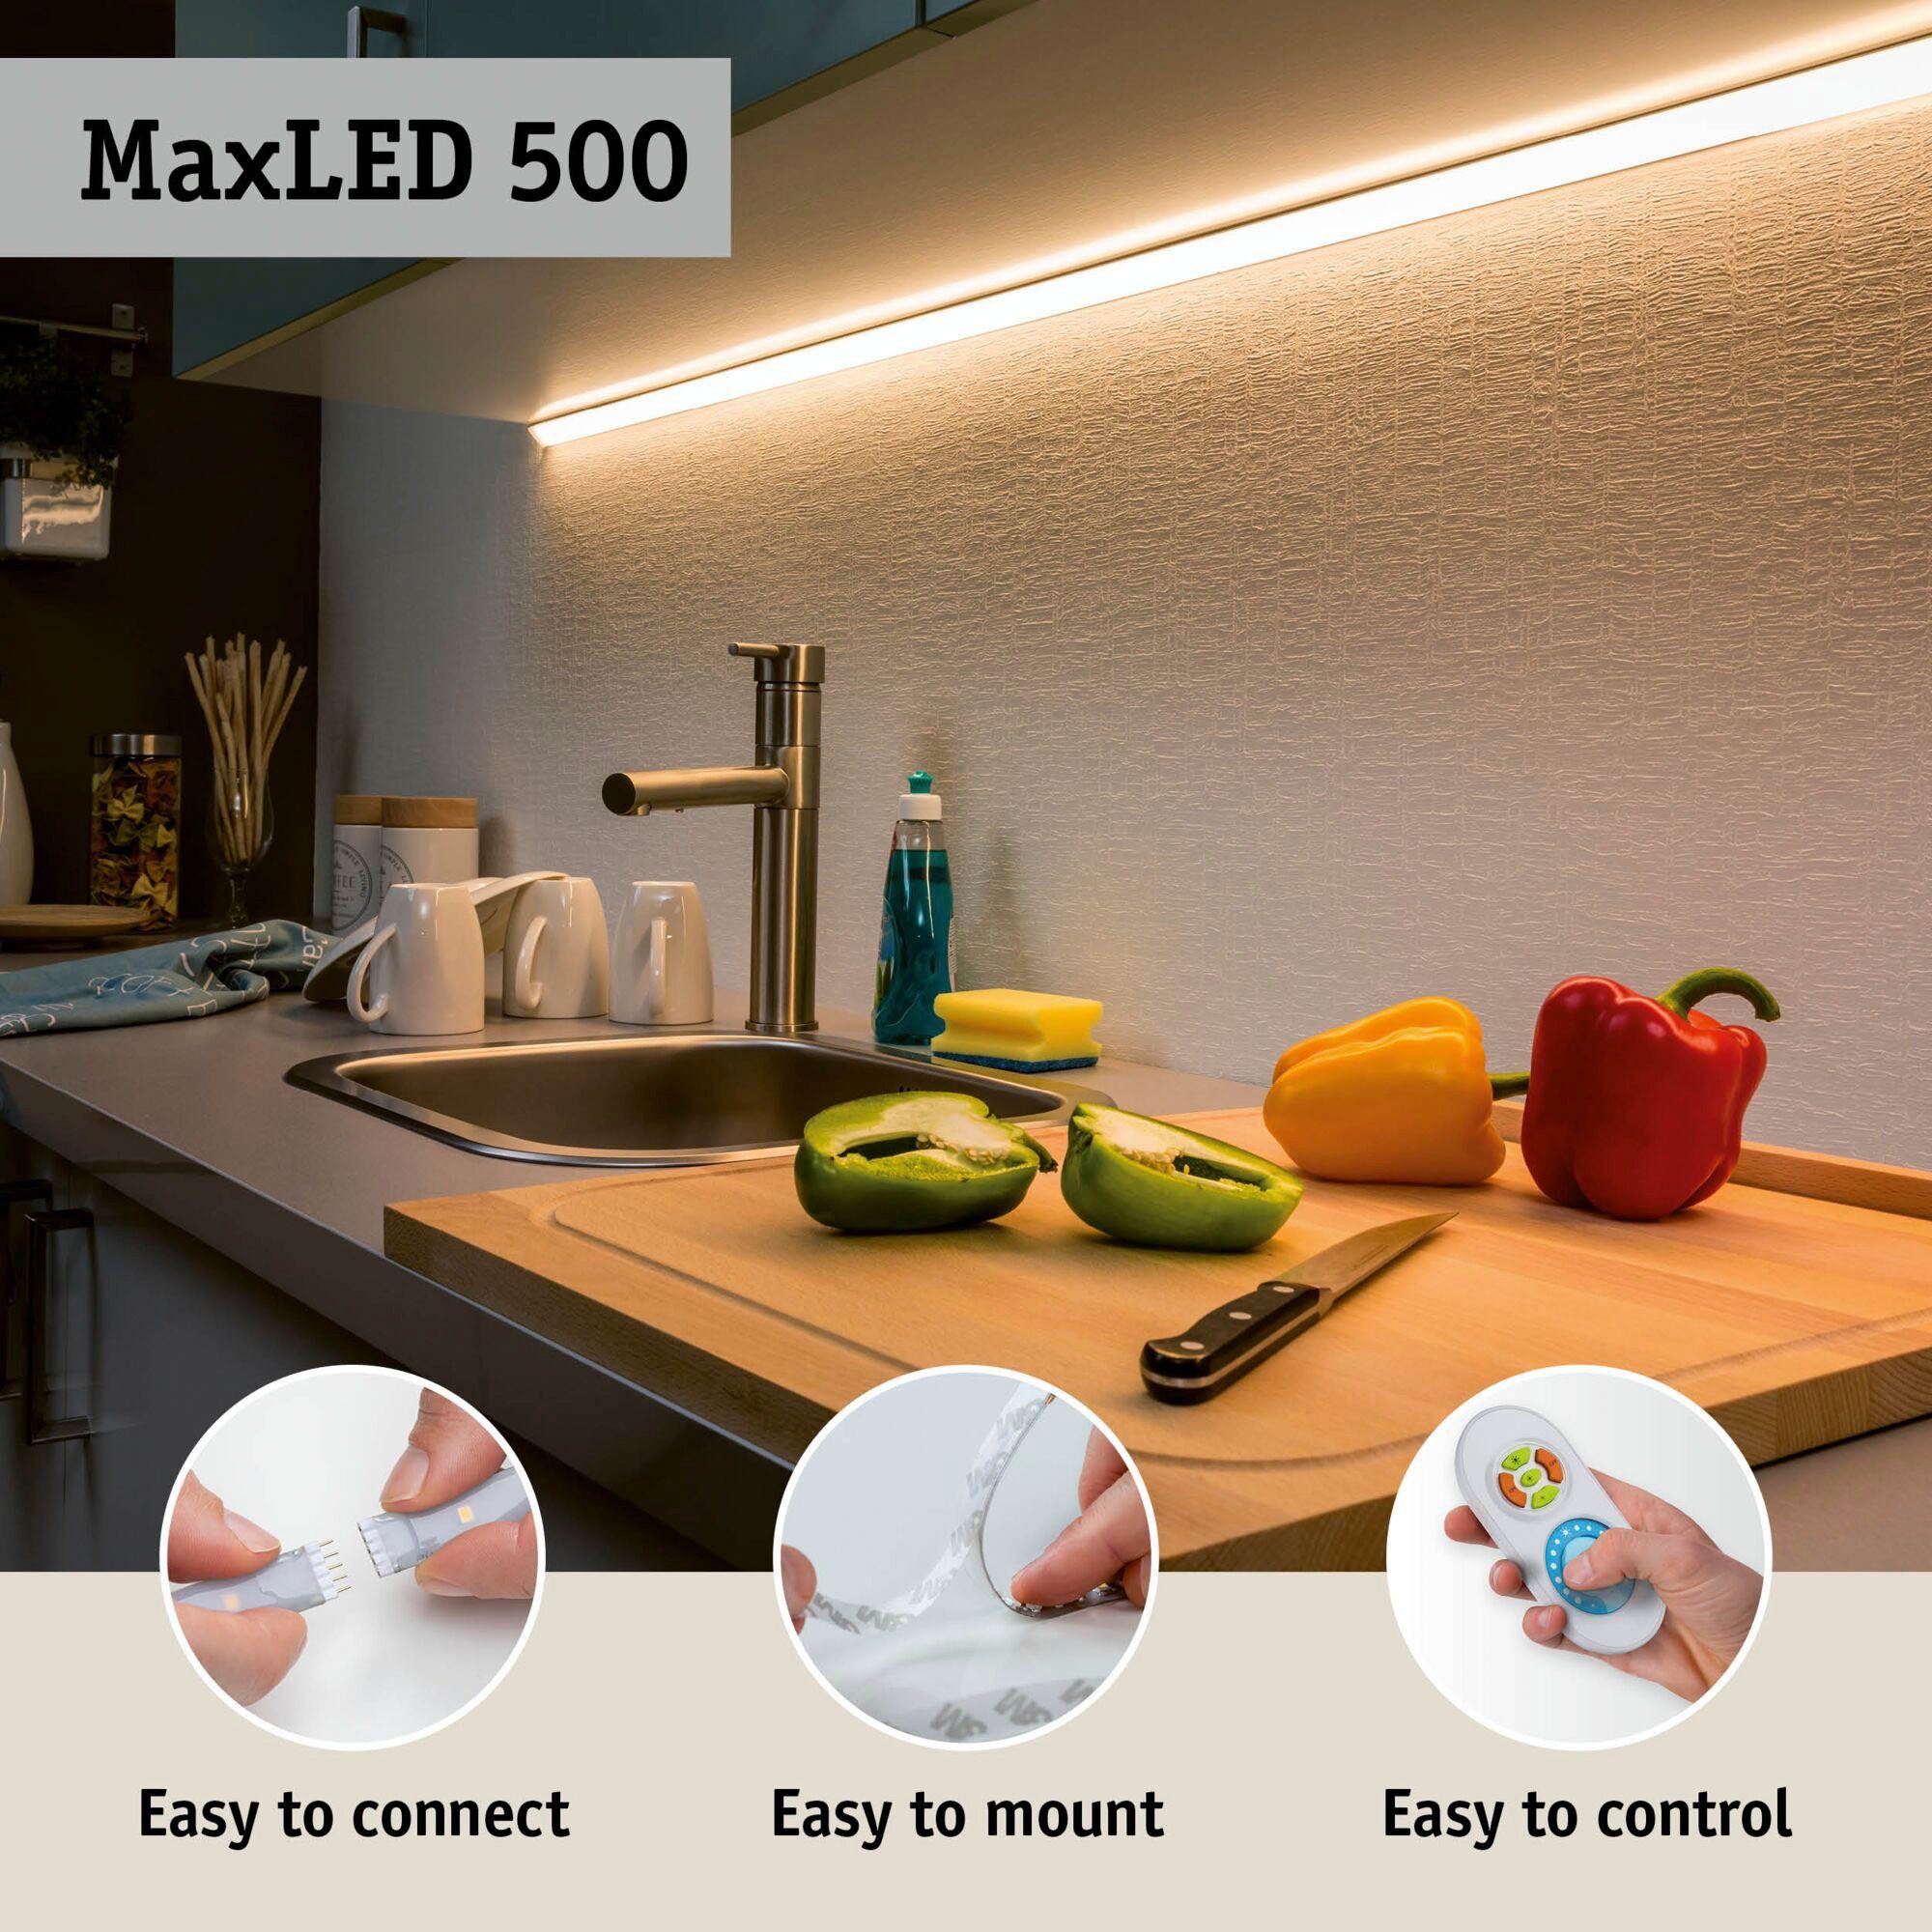 Paulmann 500 MaxLED 1-flammig, Adapterkabel 72W LED-Streifen Einzelstripe RGBW+ 10m 500lm/m, unbeschichtet inkl.